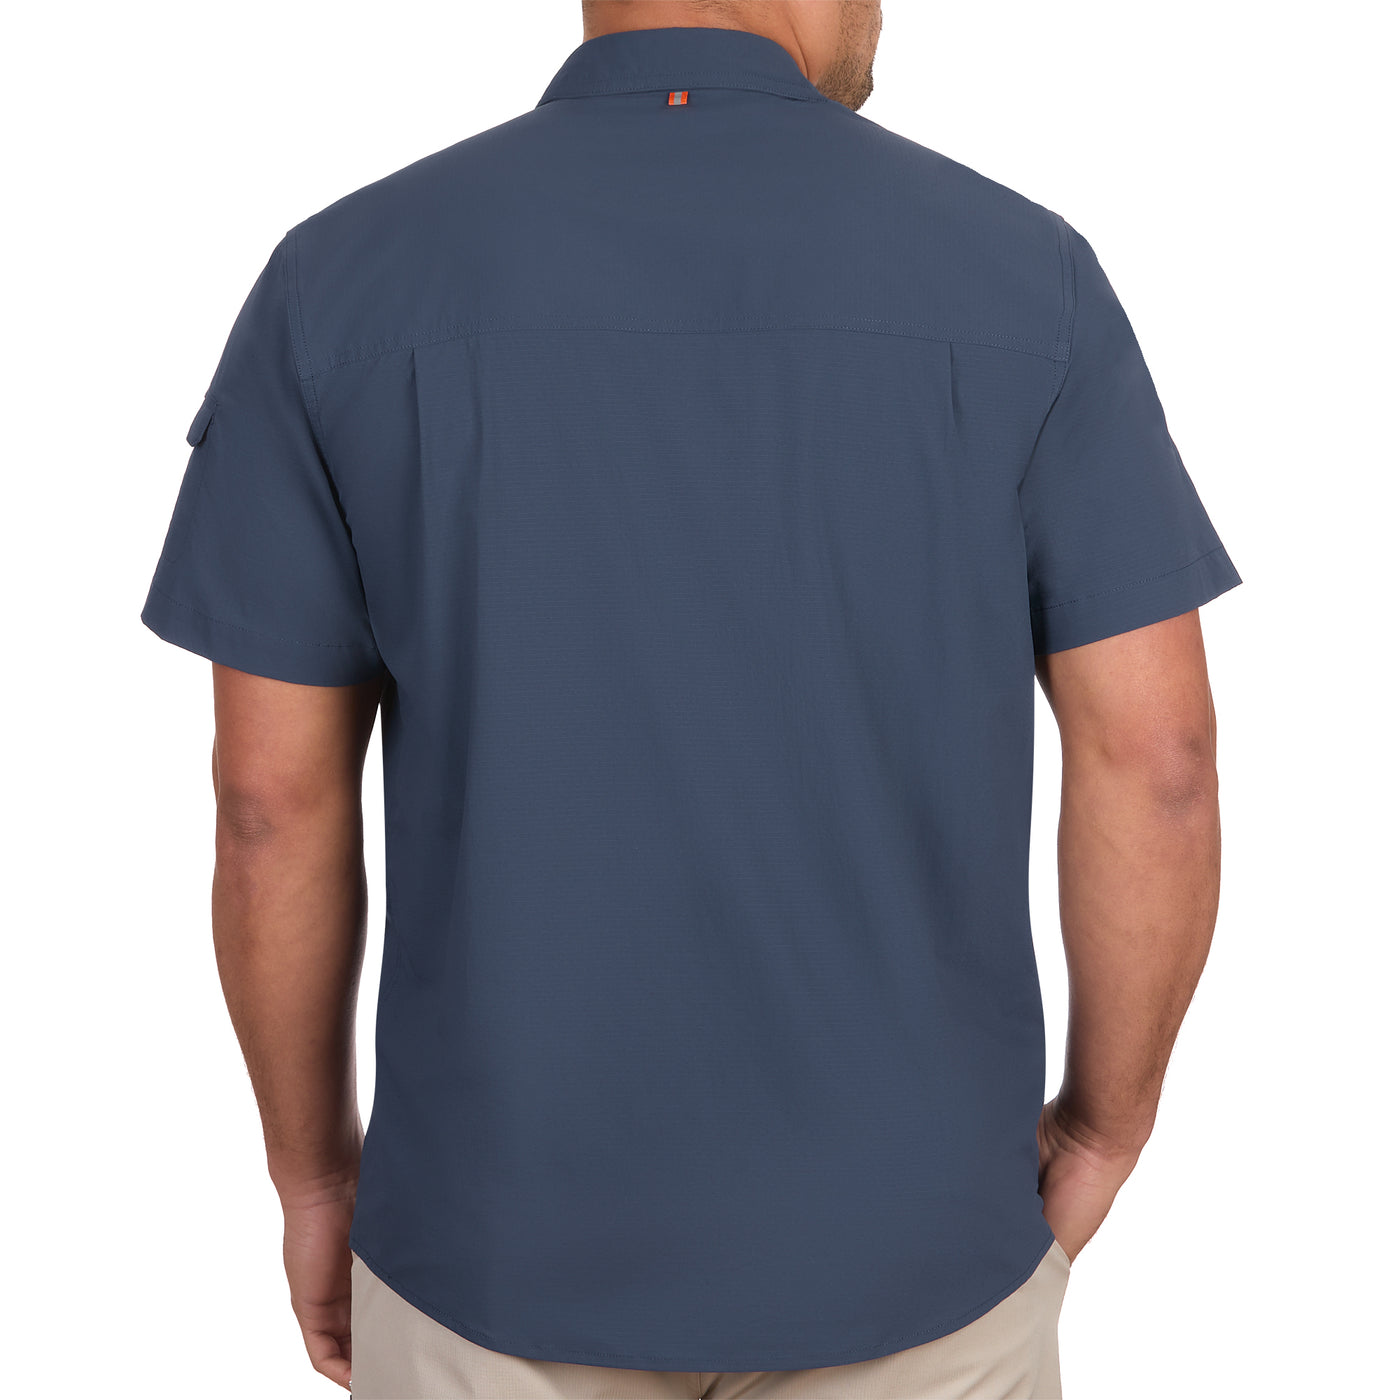 The American Outdoorsman Shirt Mens XL Red Short Sleeve Fishing Fisherman  NEW